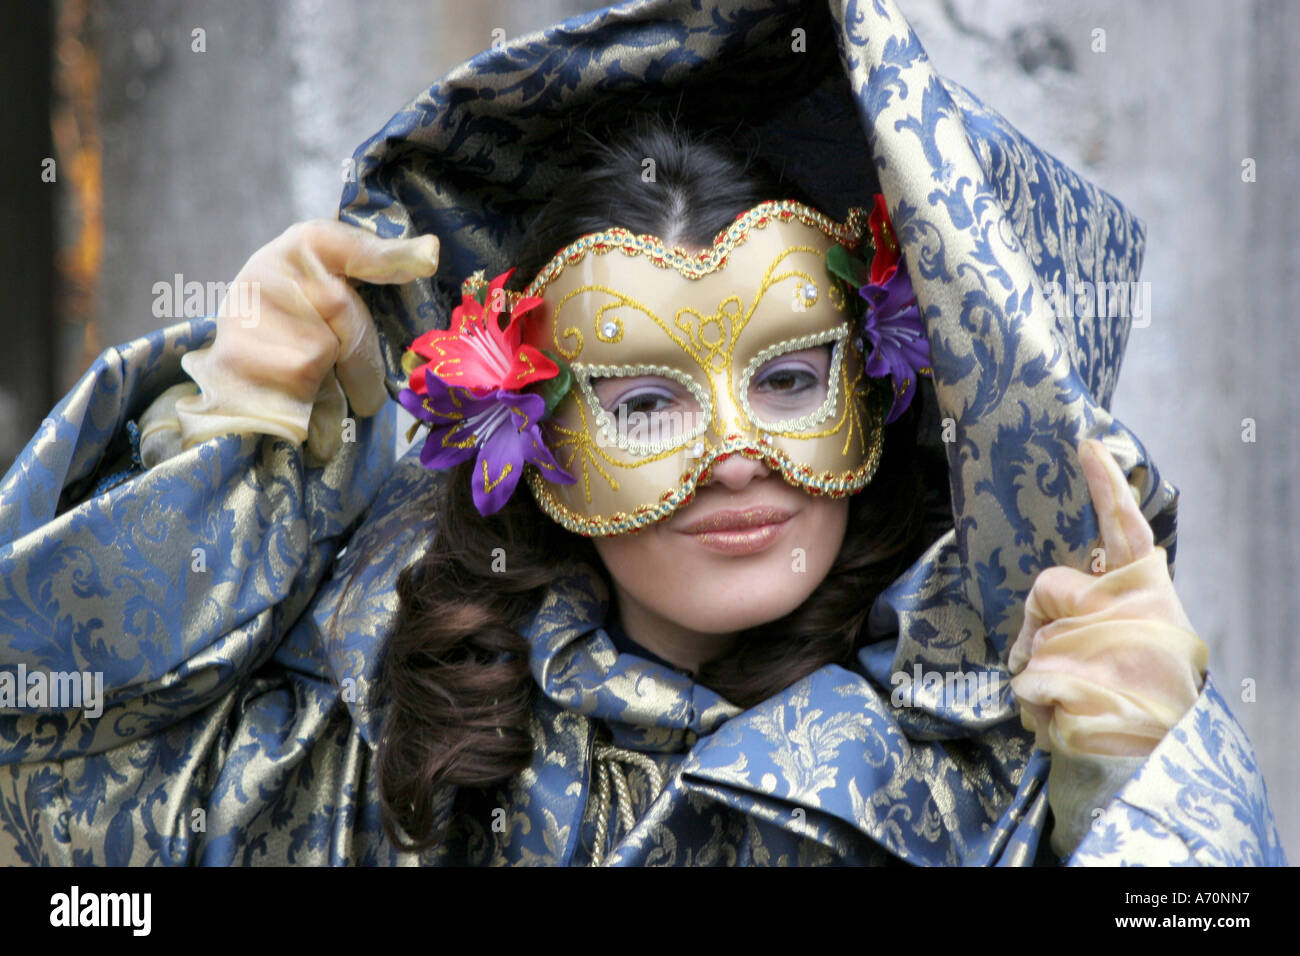 Karneval Venedig 2006junge Edelfrau mit Kaputzenumhang posiert Carnival de Venice 2006 Stock Photo